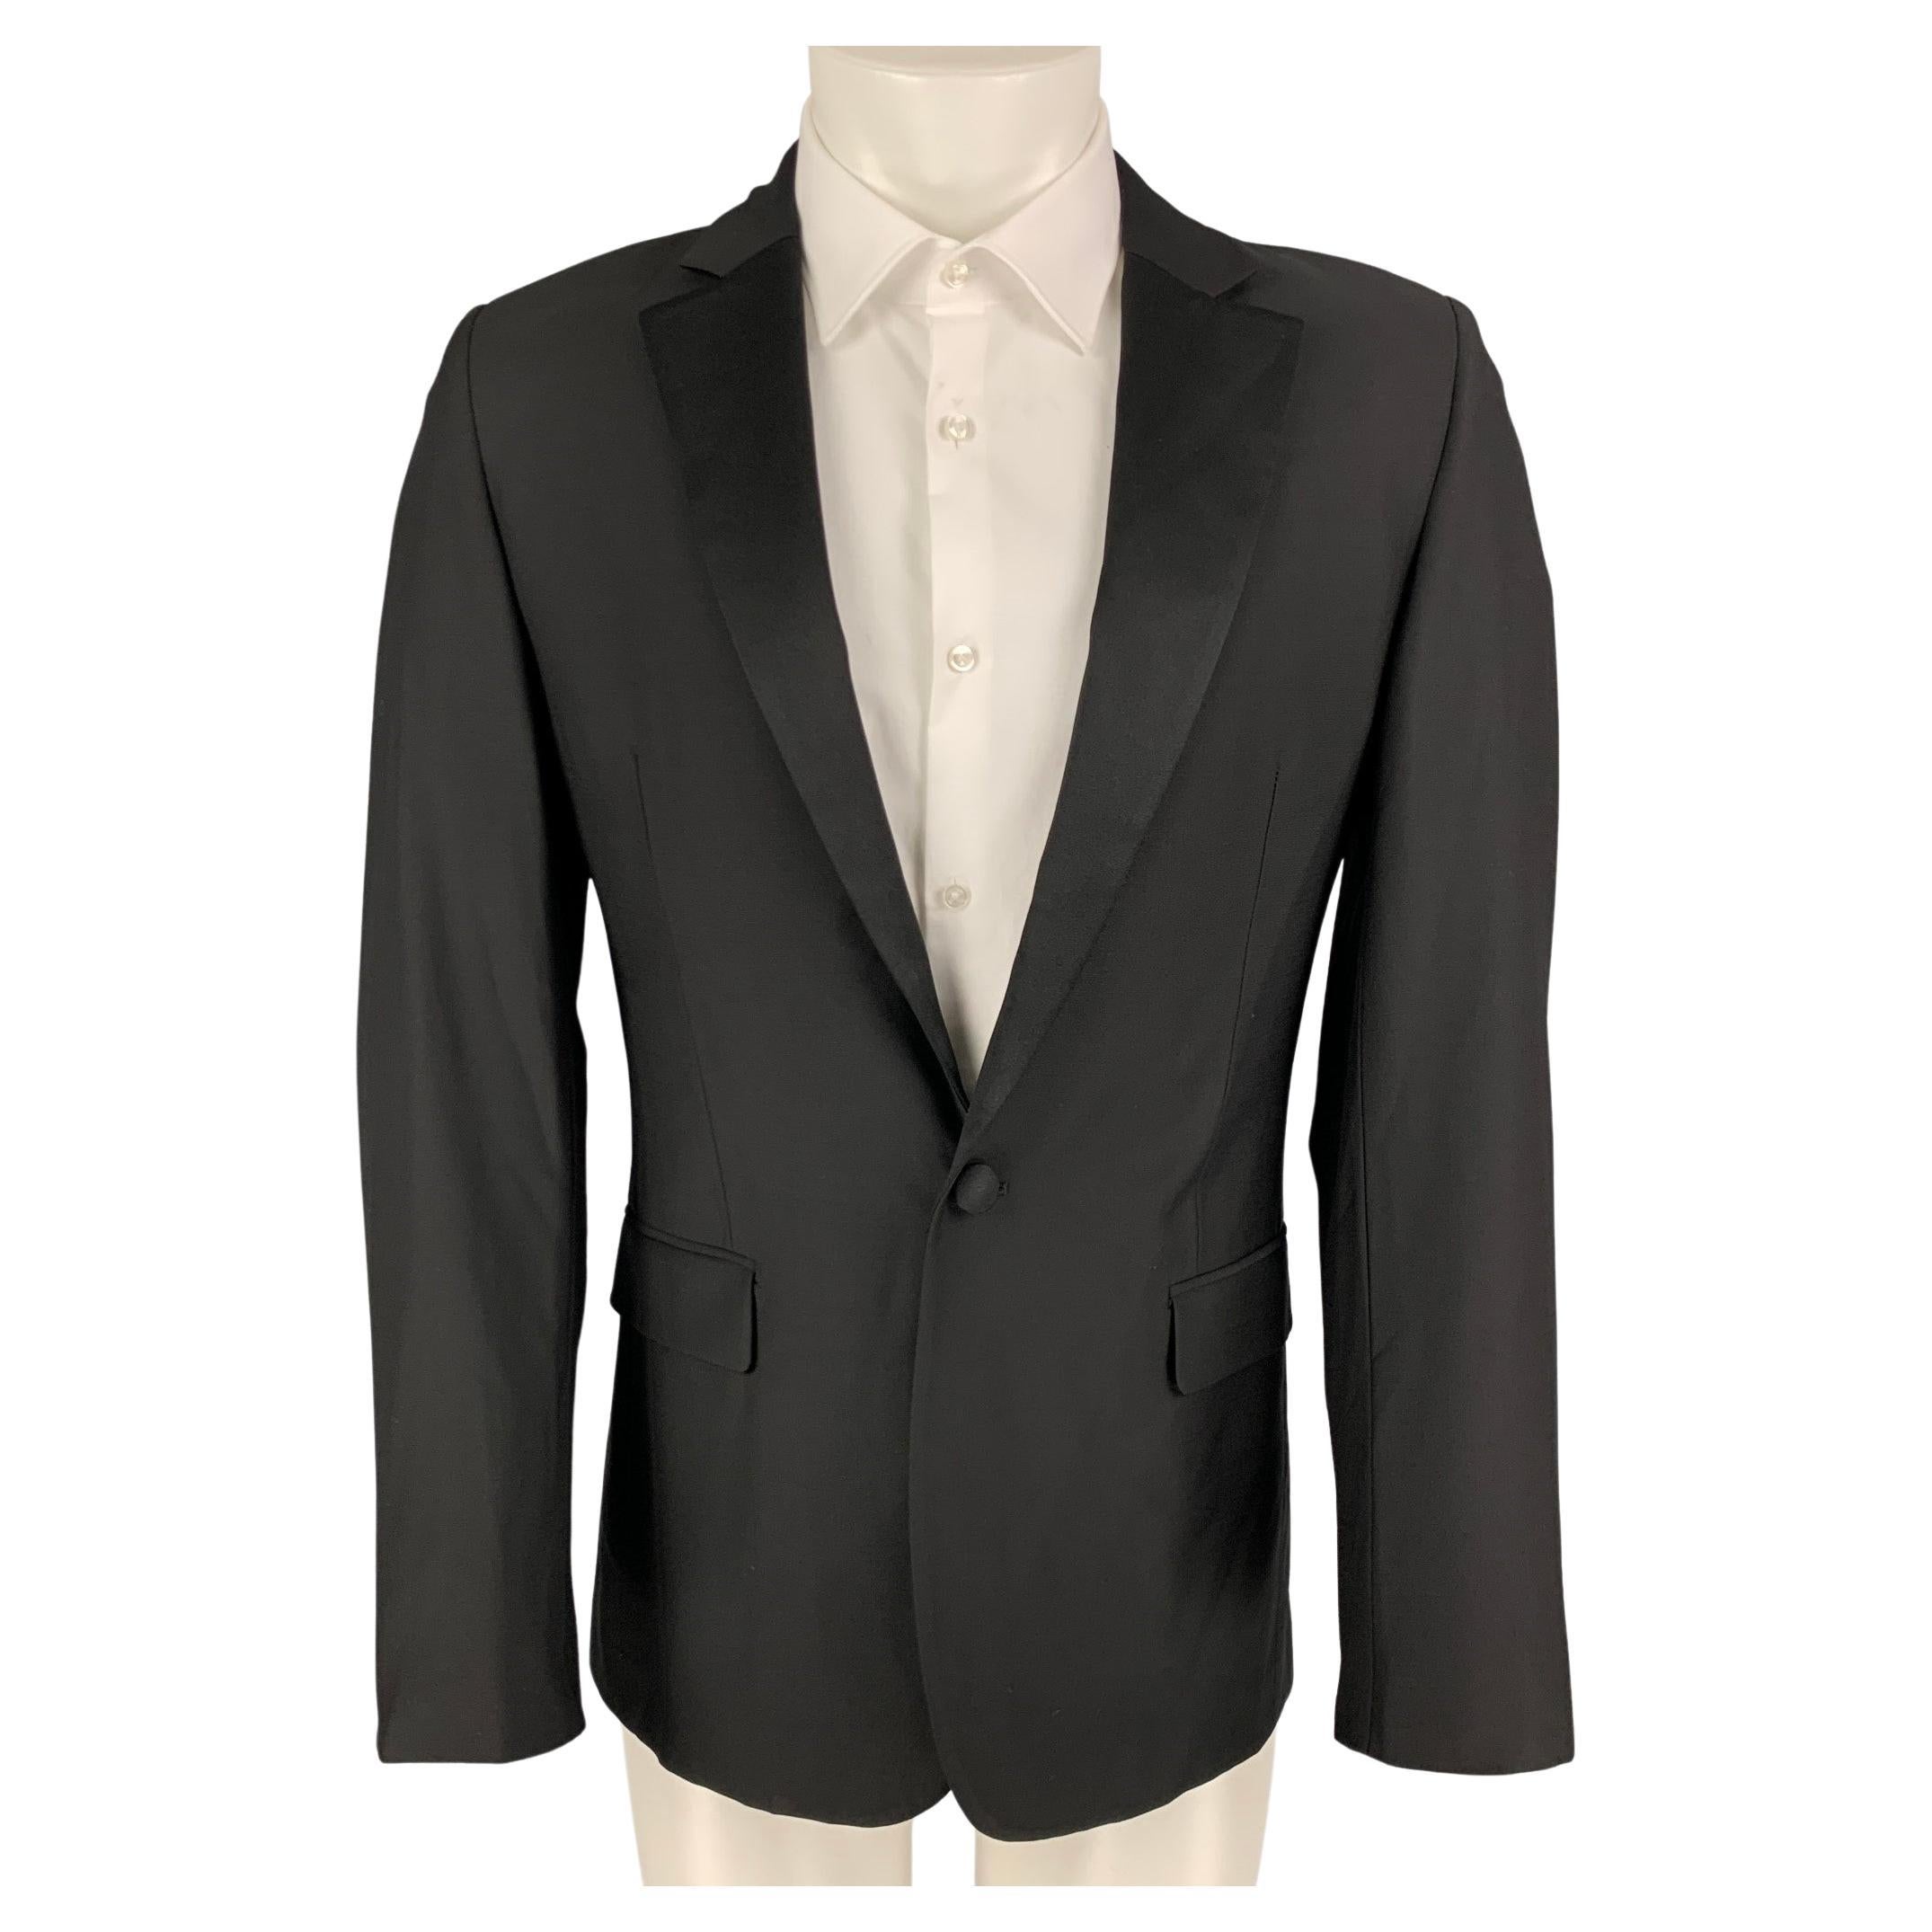 CALVIN KLEIN COLLECTION Size 38 Black Wool Tuxedo Sport Coat